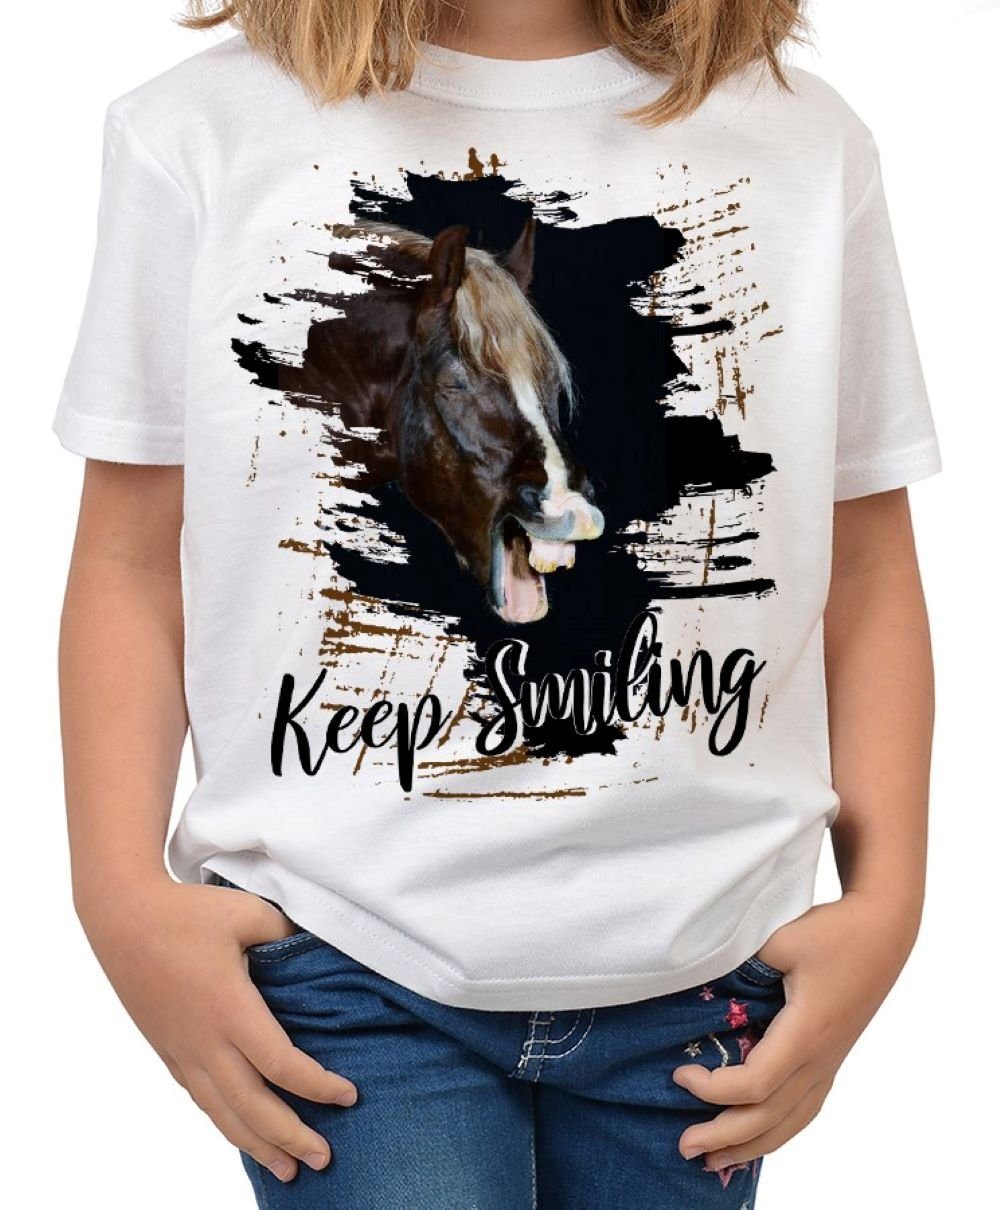 Tini - Shirts T-Shirt Kinder Lachendes Motiv Smiling Pferd Pferde Kaltblut Keep Tshirt Kindershirt 